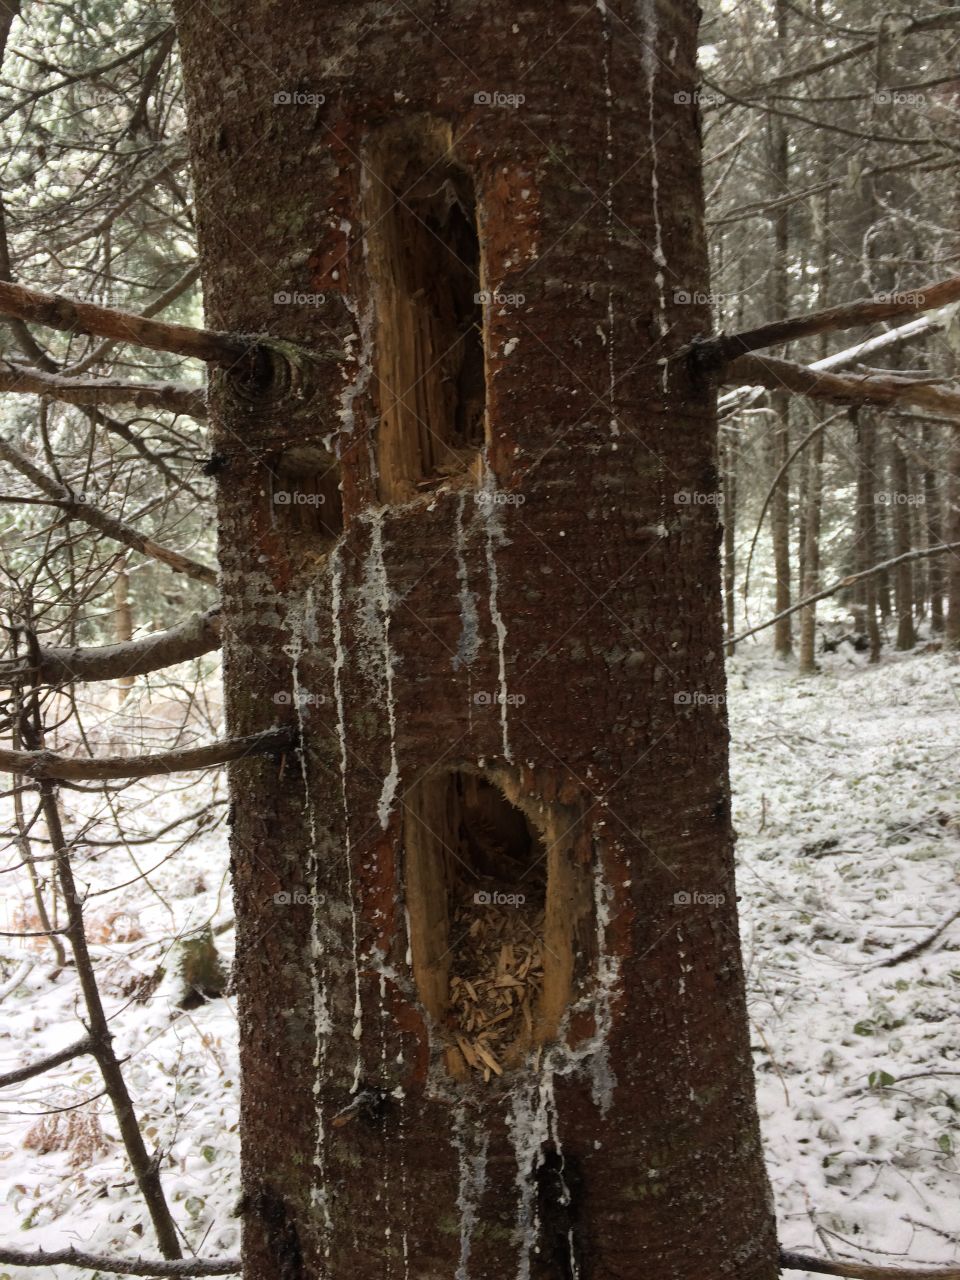 Woodpecker damaged tree